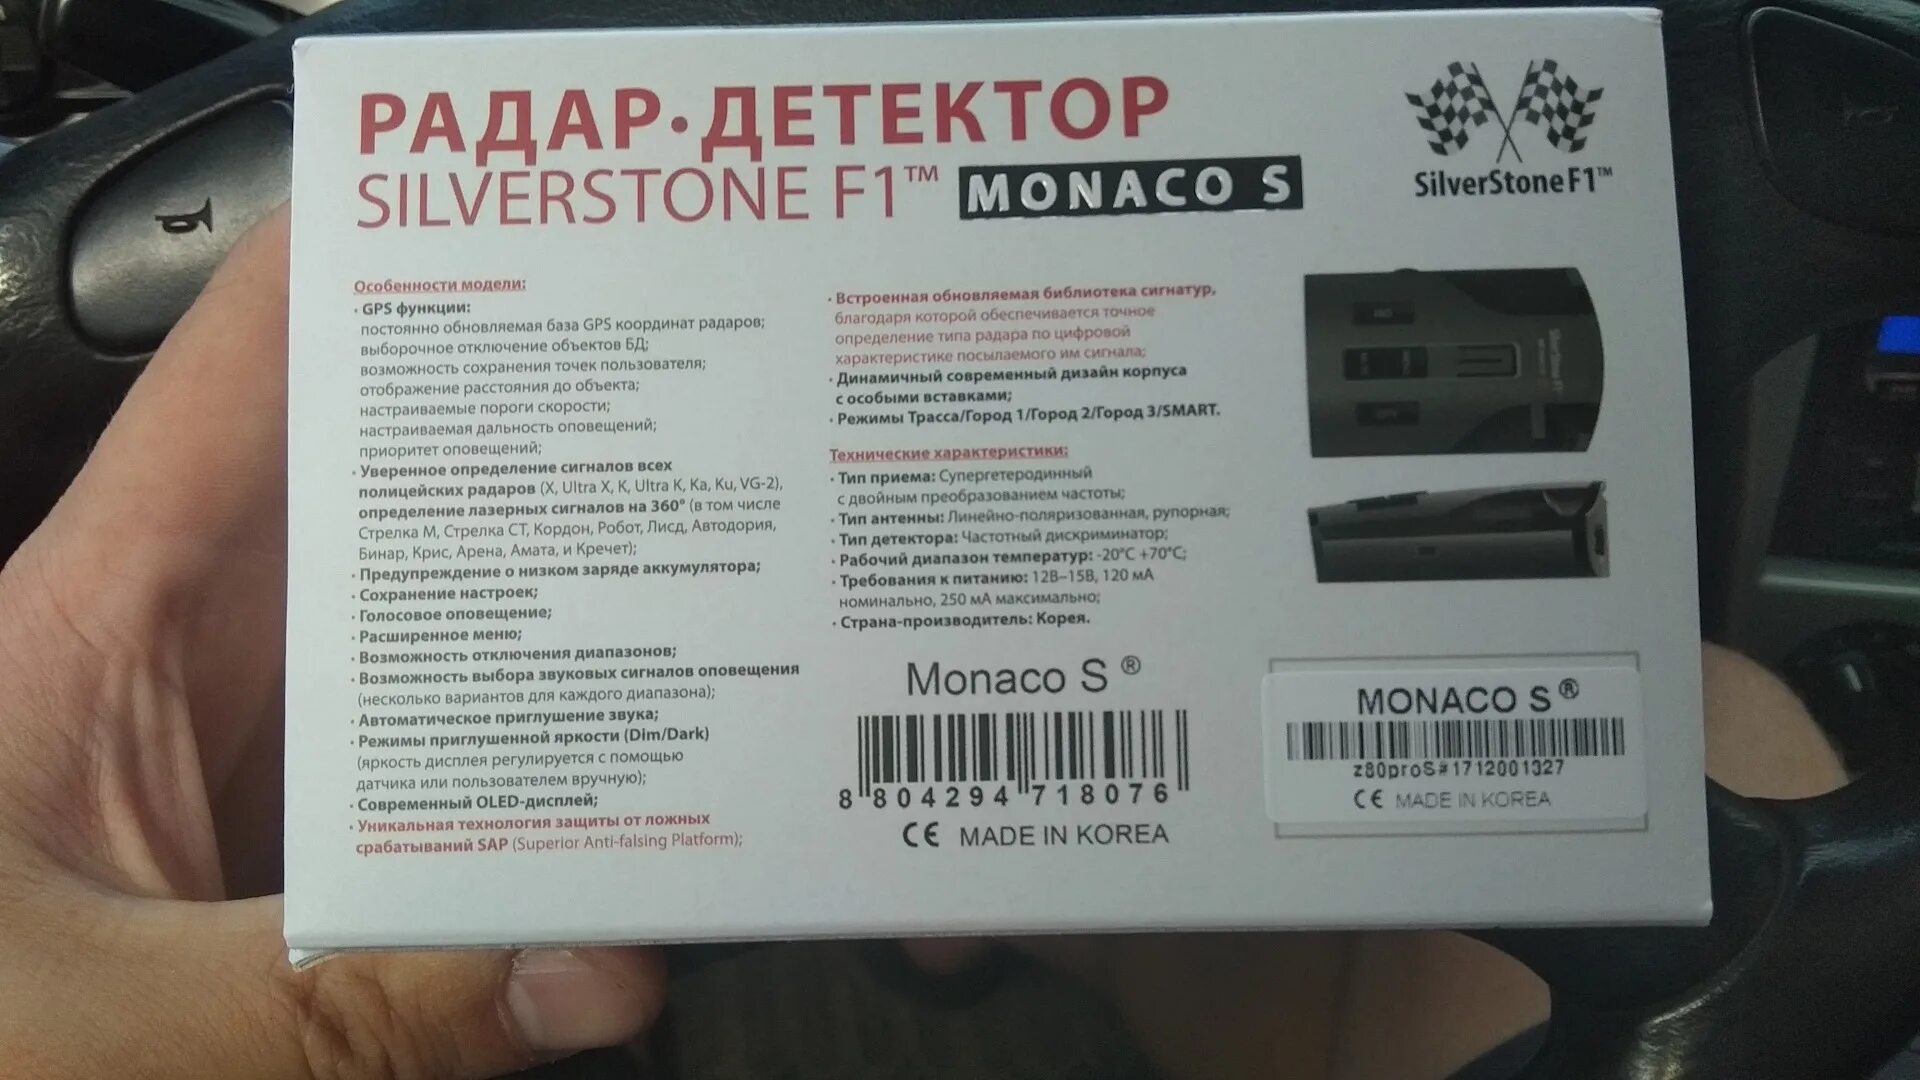 Silverstone f1 Monaco s коробка. Зарядка Silverstone f1. Silverstone f1 гарантийный талон. Silverstone f1 обновление. Режимы радар детектора